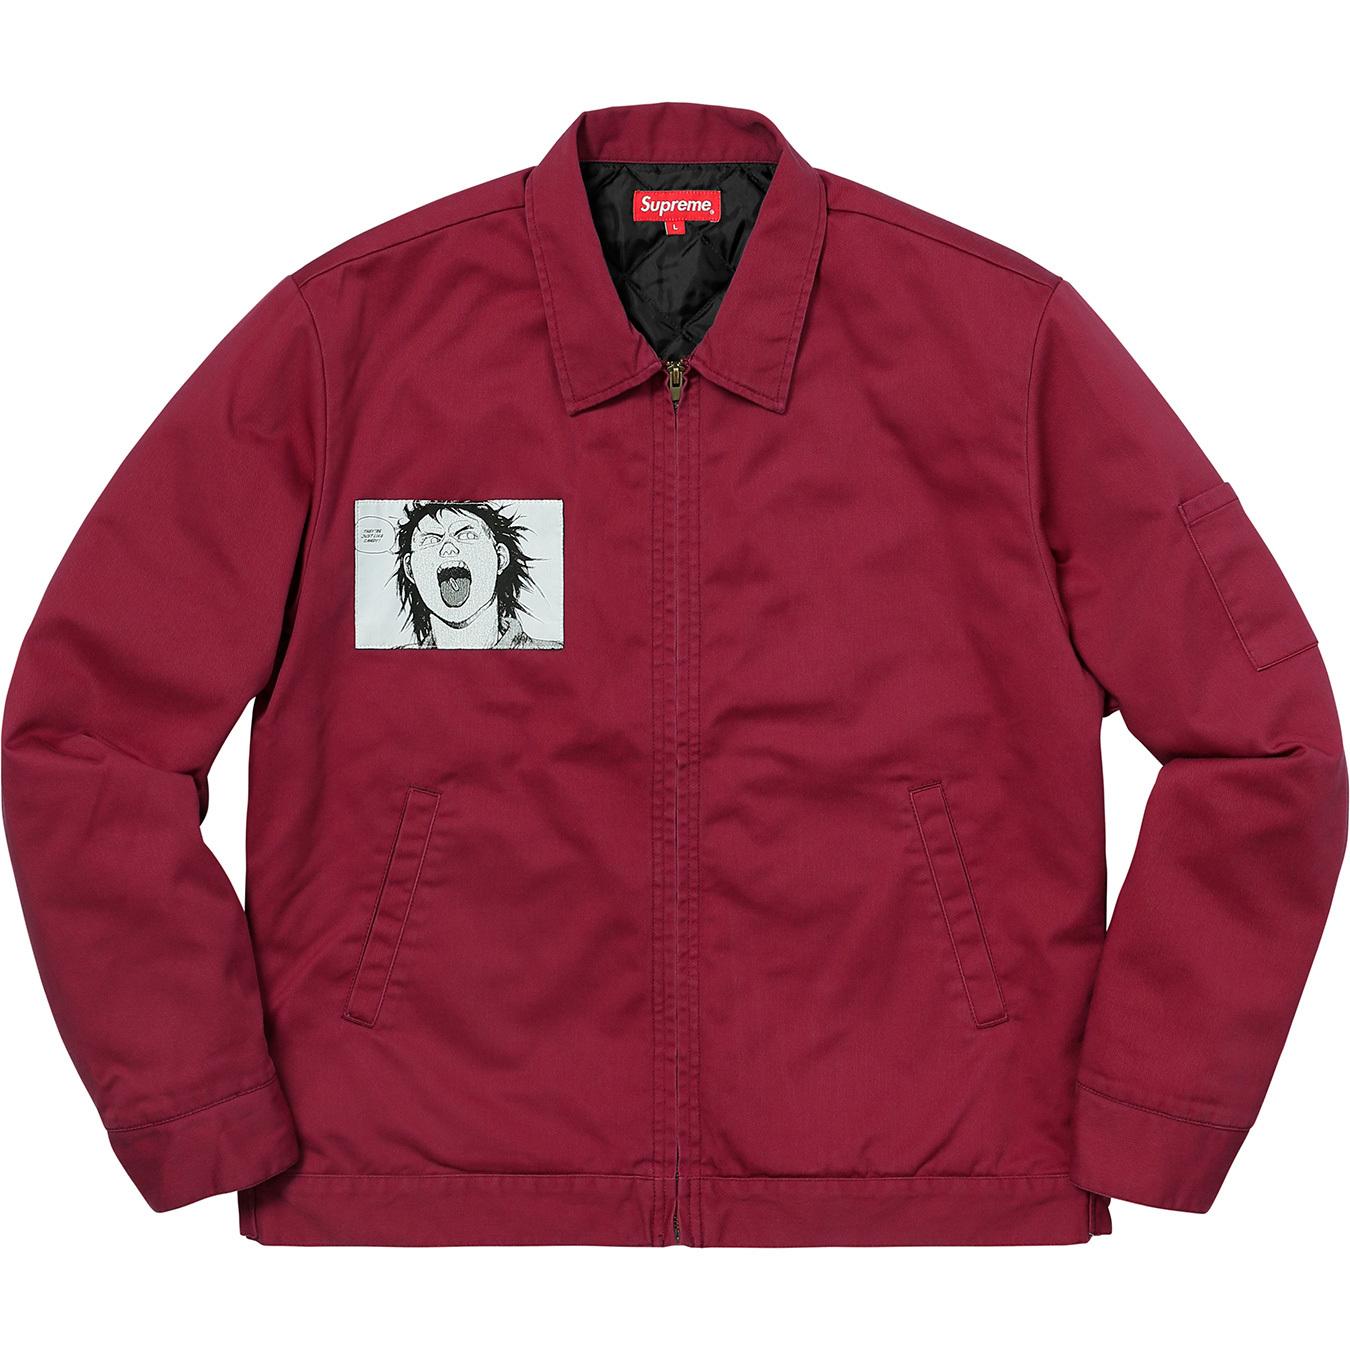 Supreme Akira Work Jacket in Light Burgundy (Red) for Men - Lyst